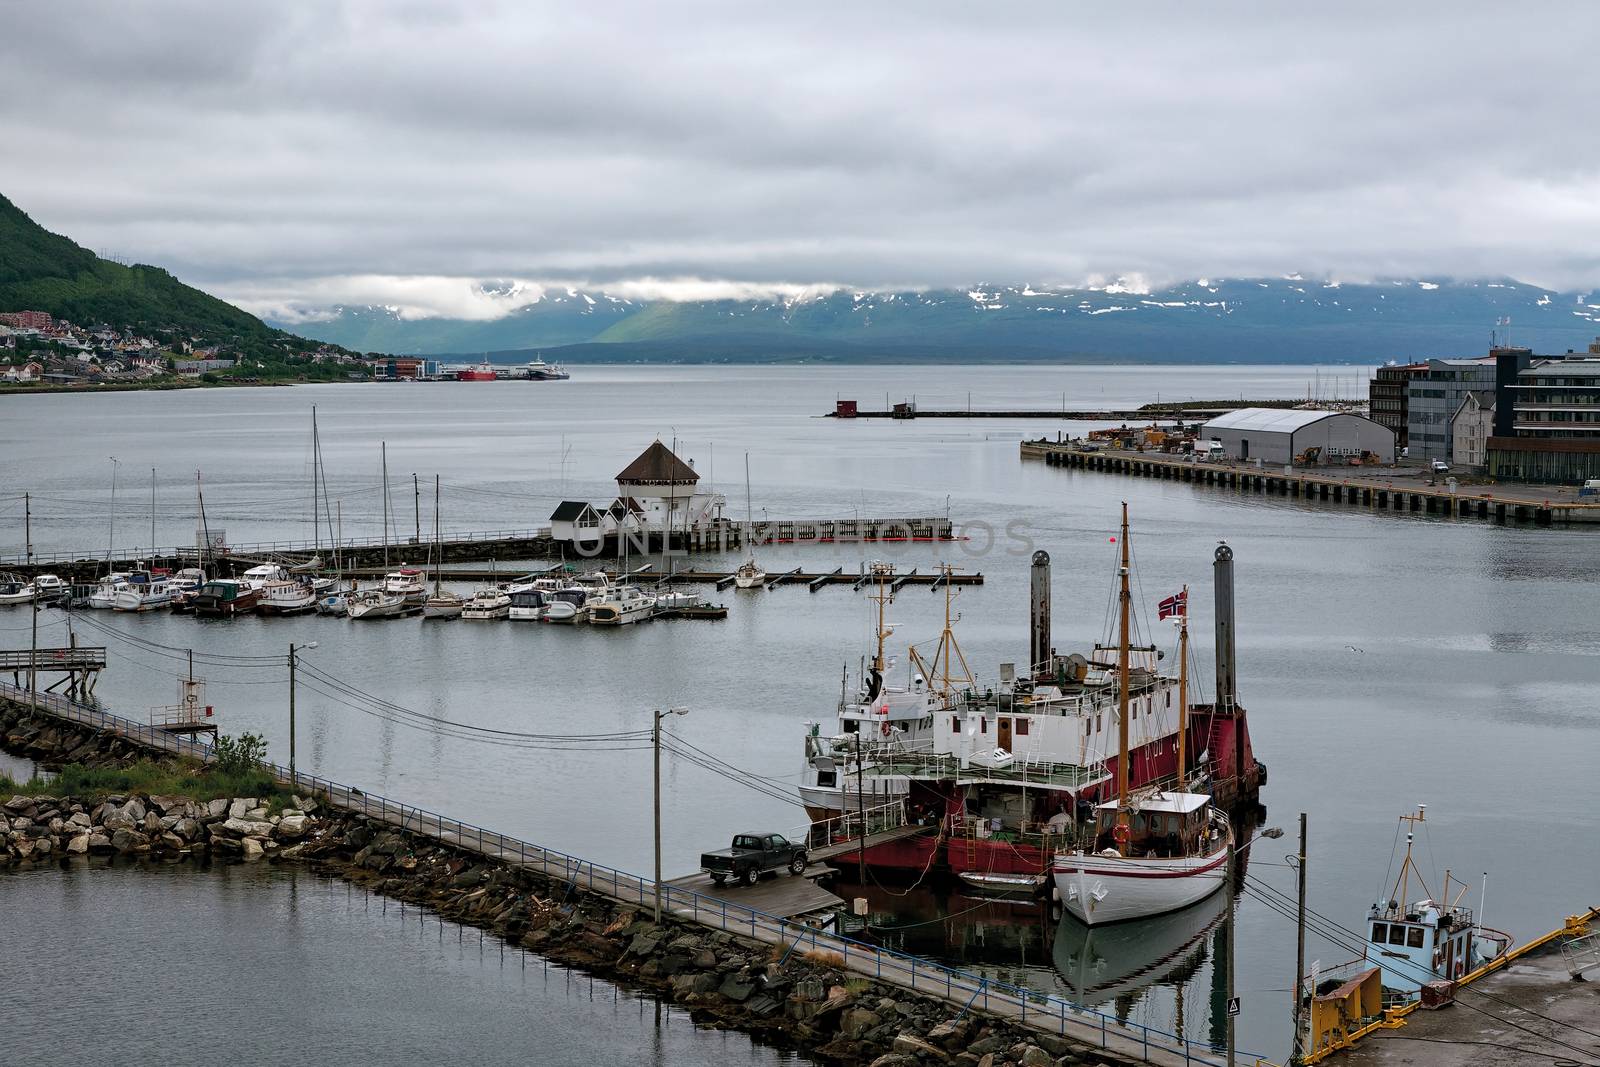 Harbour in Tromso, Norway by LuigiMorbidelli